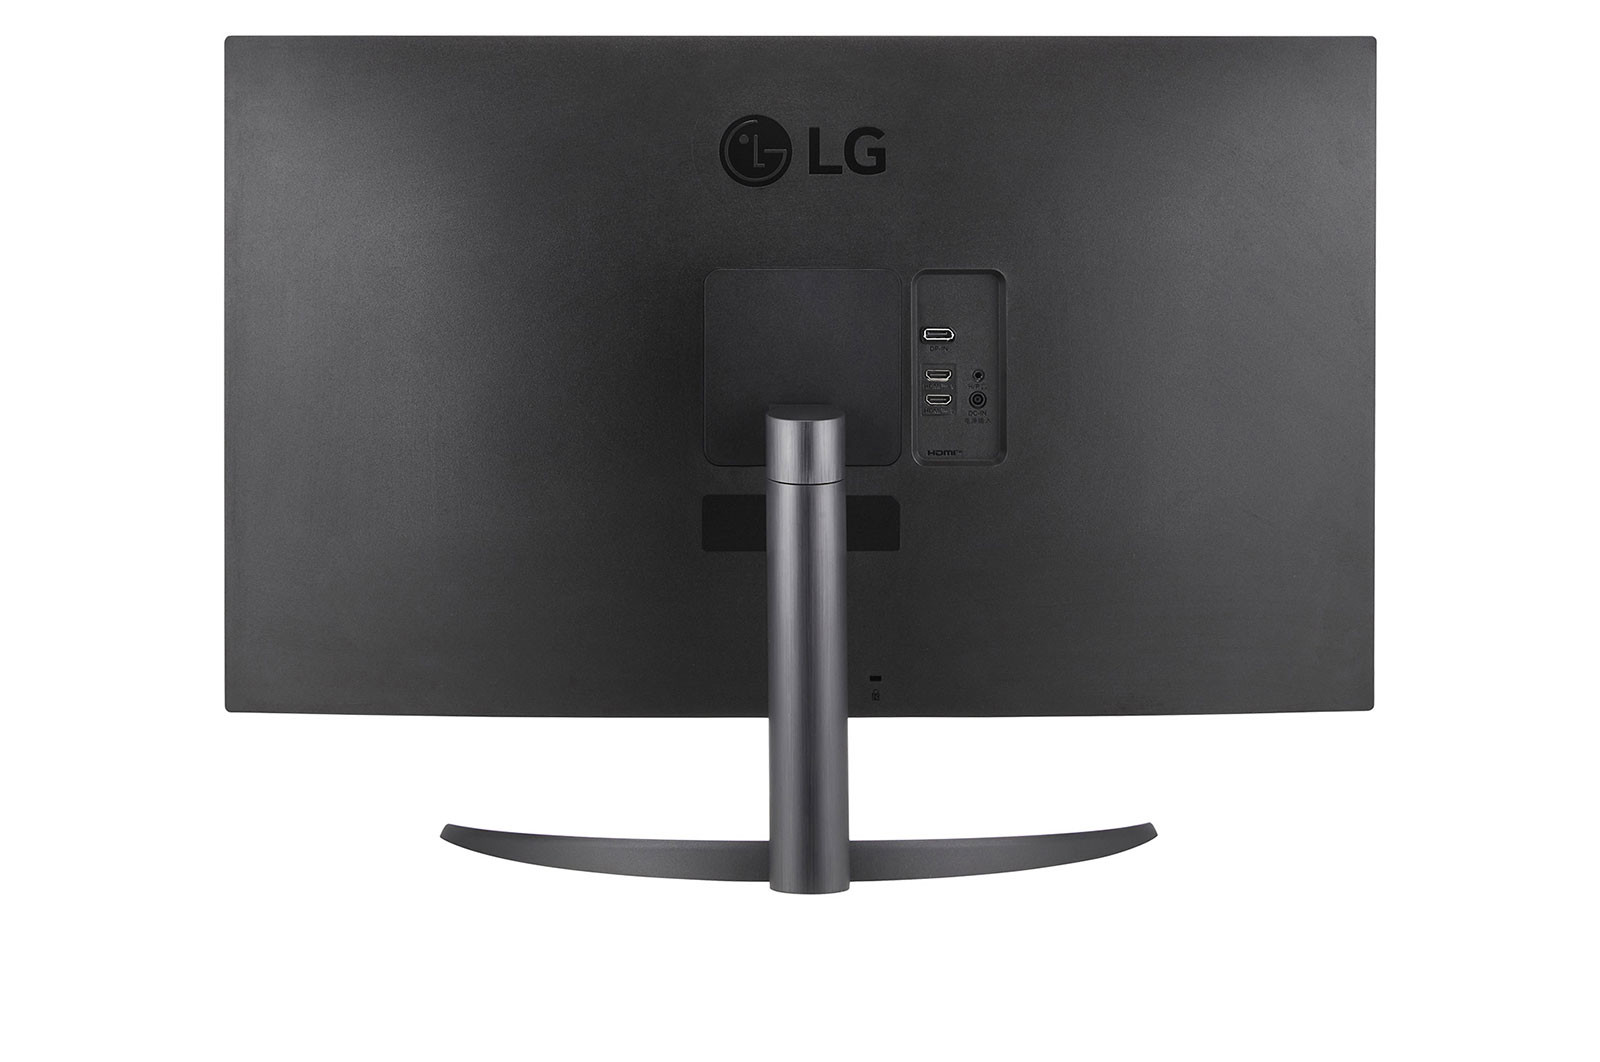 LG-32UR500-B-UHD-4K-HDR-Monitor-Demo